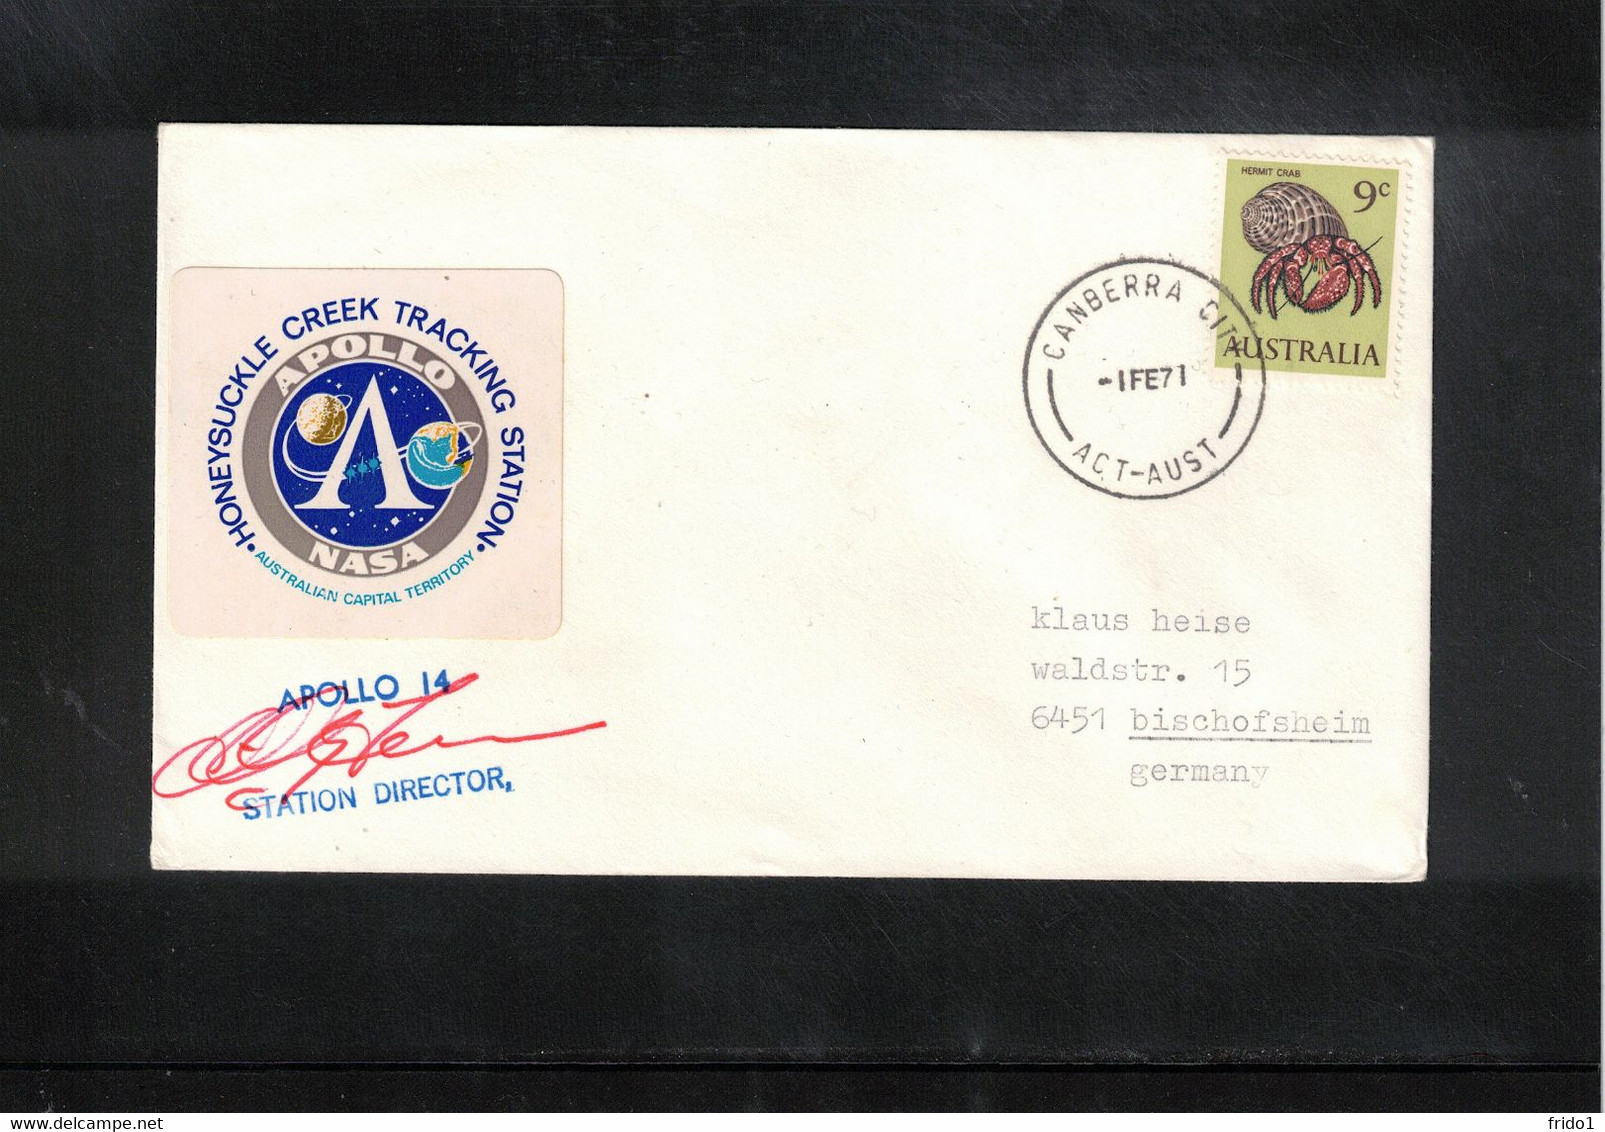 Australia 1971 Space / Raumfahrt Apollo 14 Honeysuckle Creek Tracking Station Interesting Signed Letter - Océanie